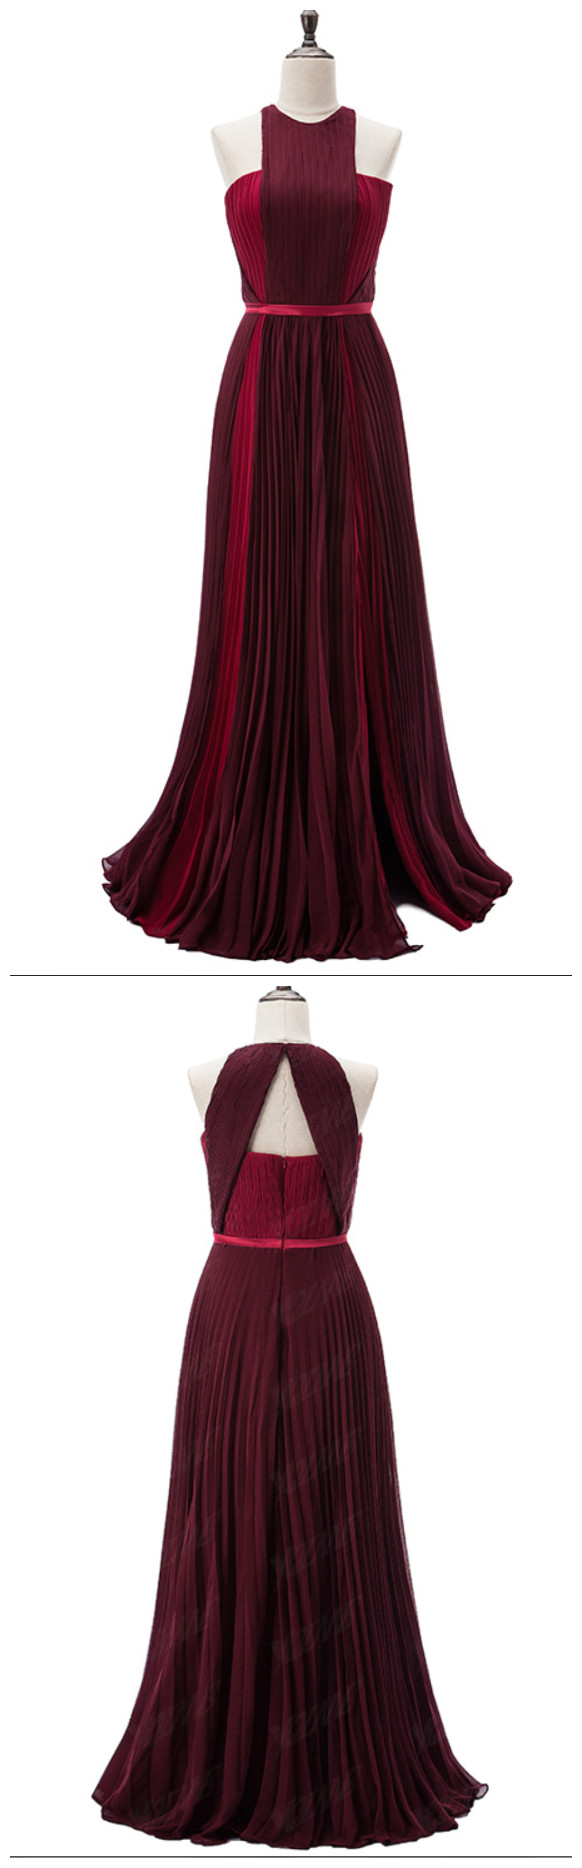 Spark Queen Blake Lively Red Carpet Celebrity Dresses Burgundy Long Evening Gown Halter Crepe Split Runway Fashion Dress